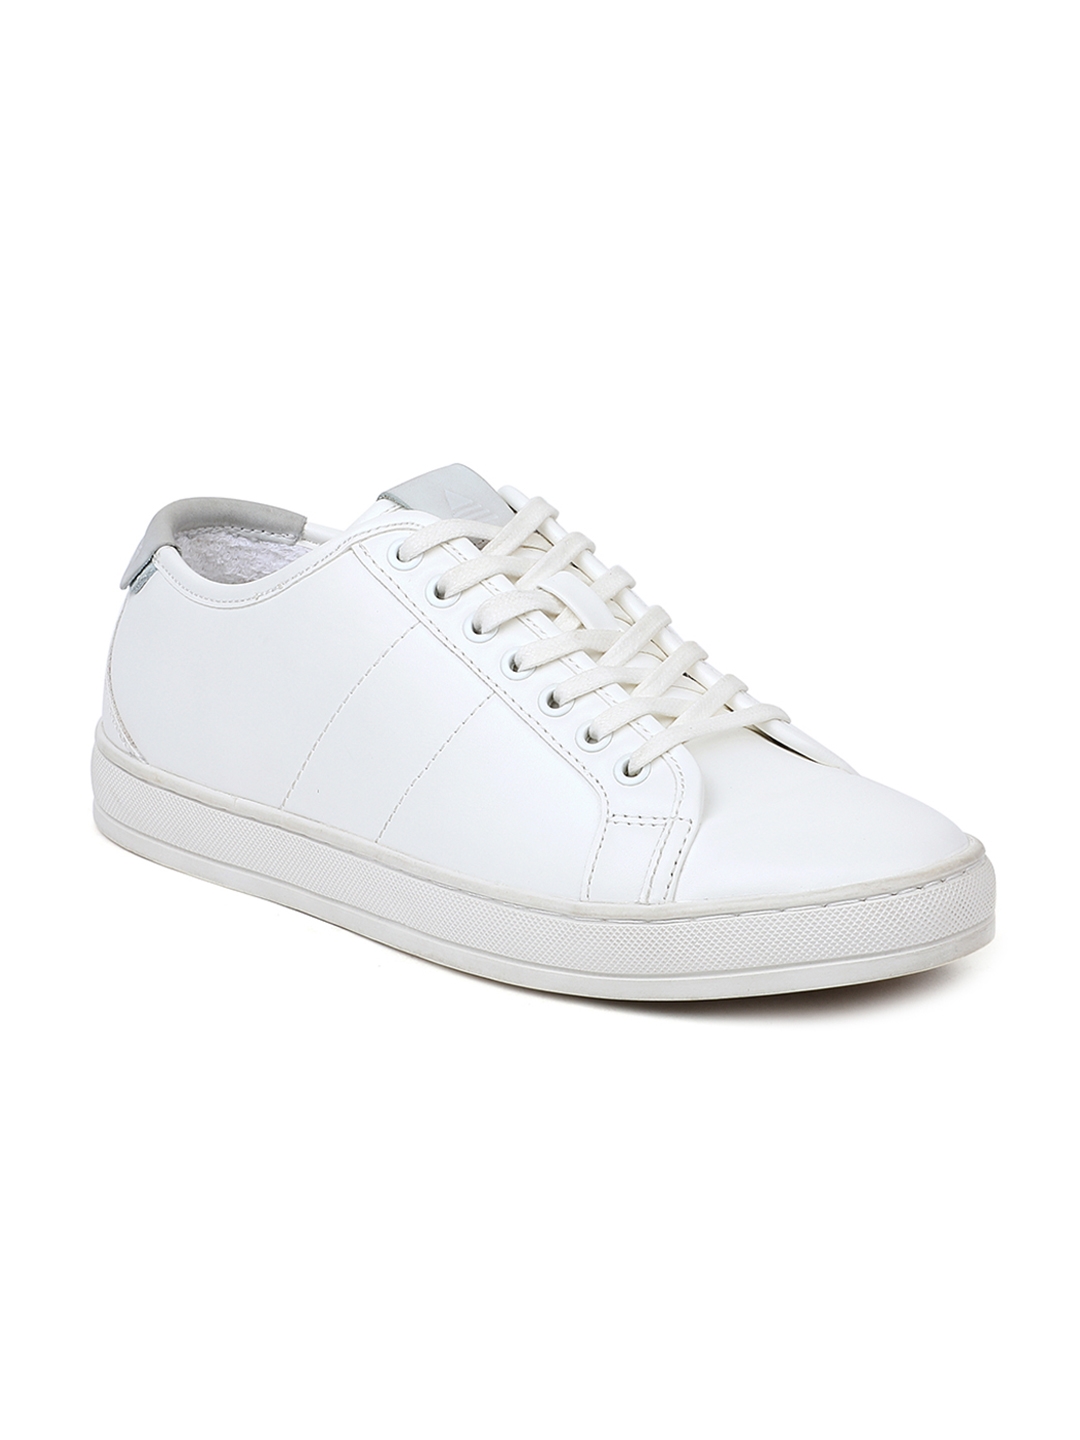 Saredon Men's White Sneakers | Aldo Shoes